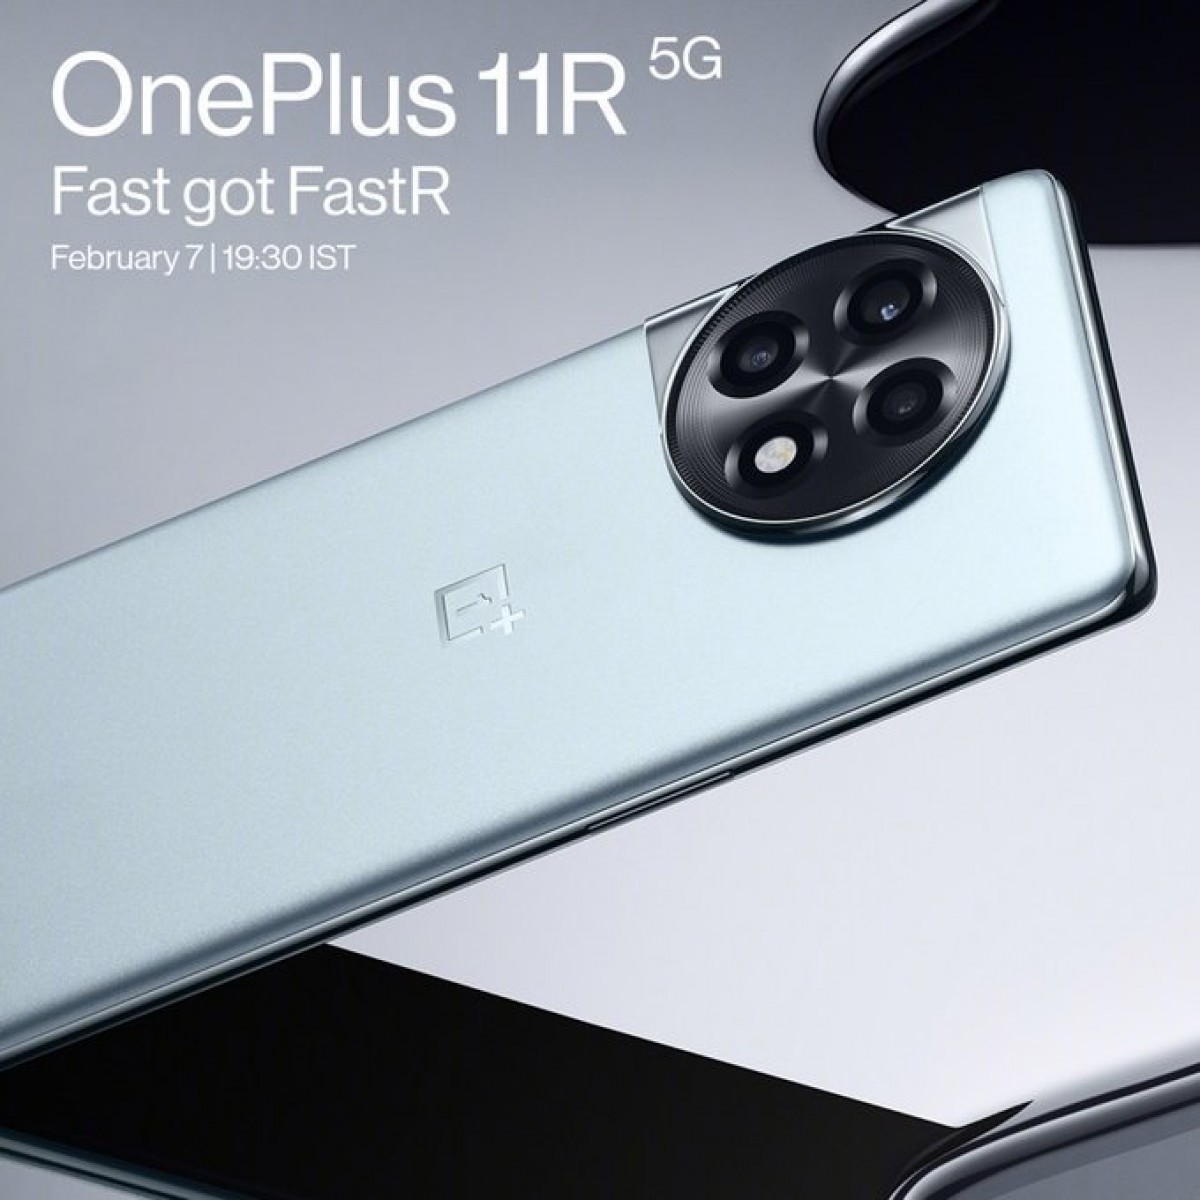 Le OnePlus 11R